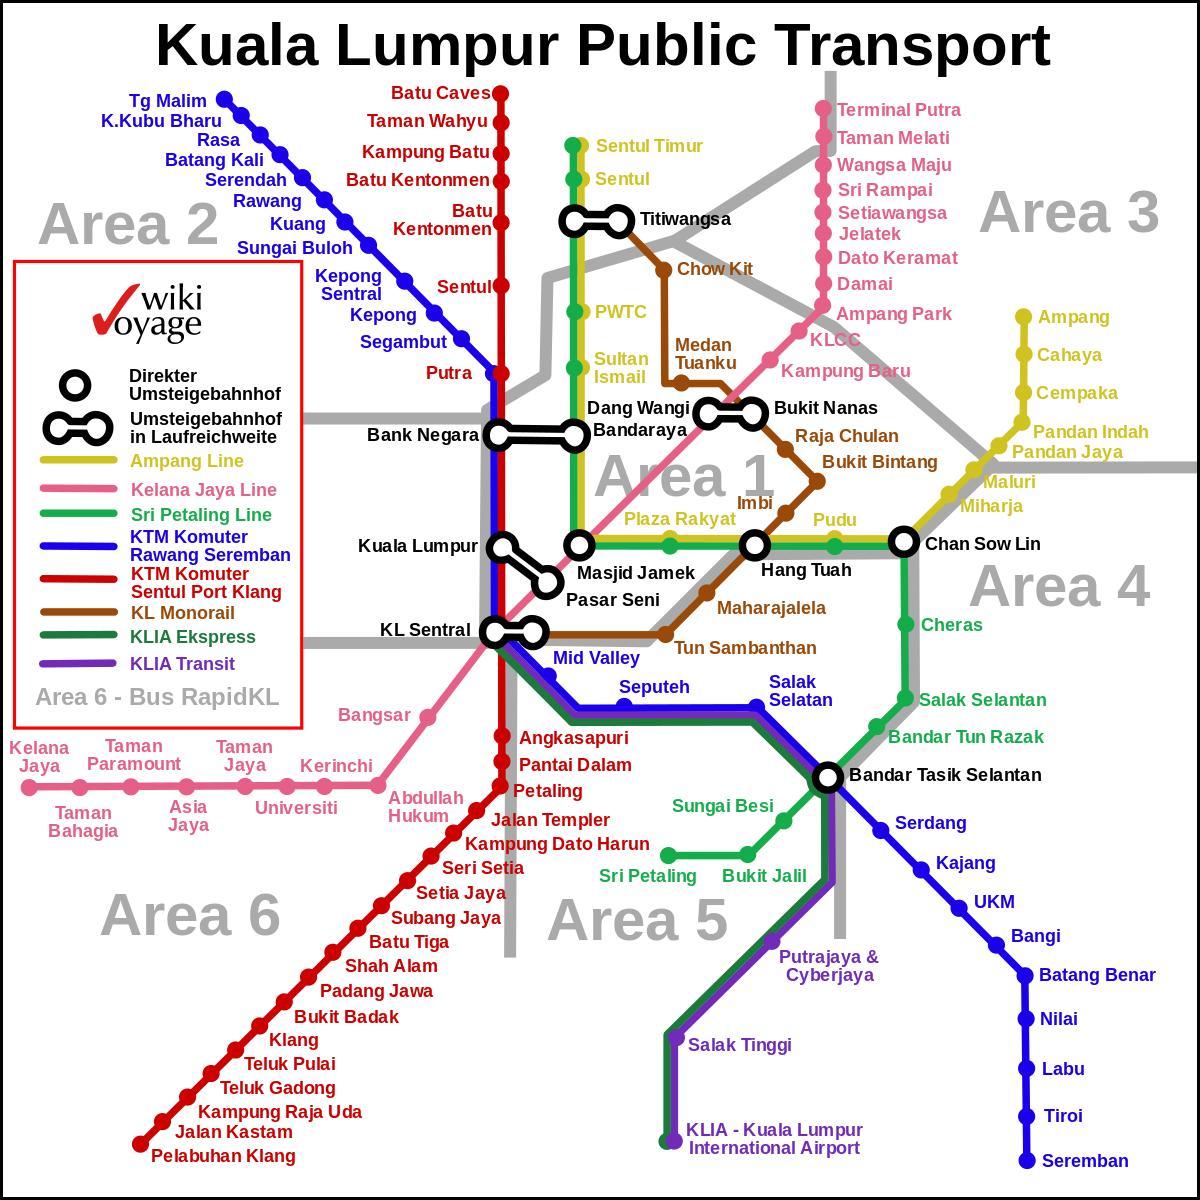 सार्वजनिक परिवहन नक्शा कुआलालंपुर